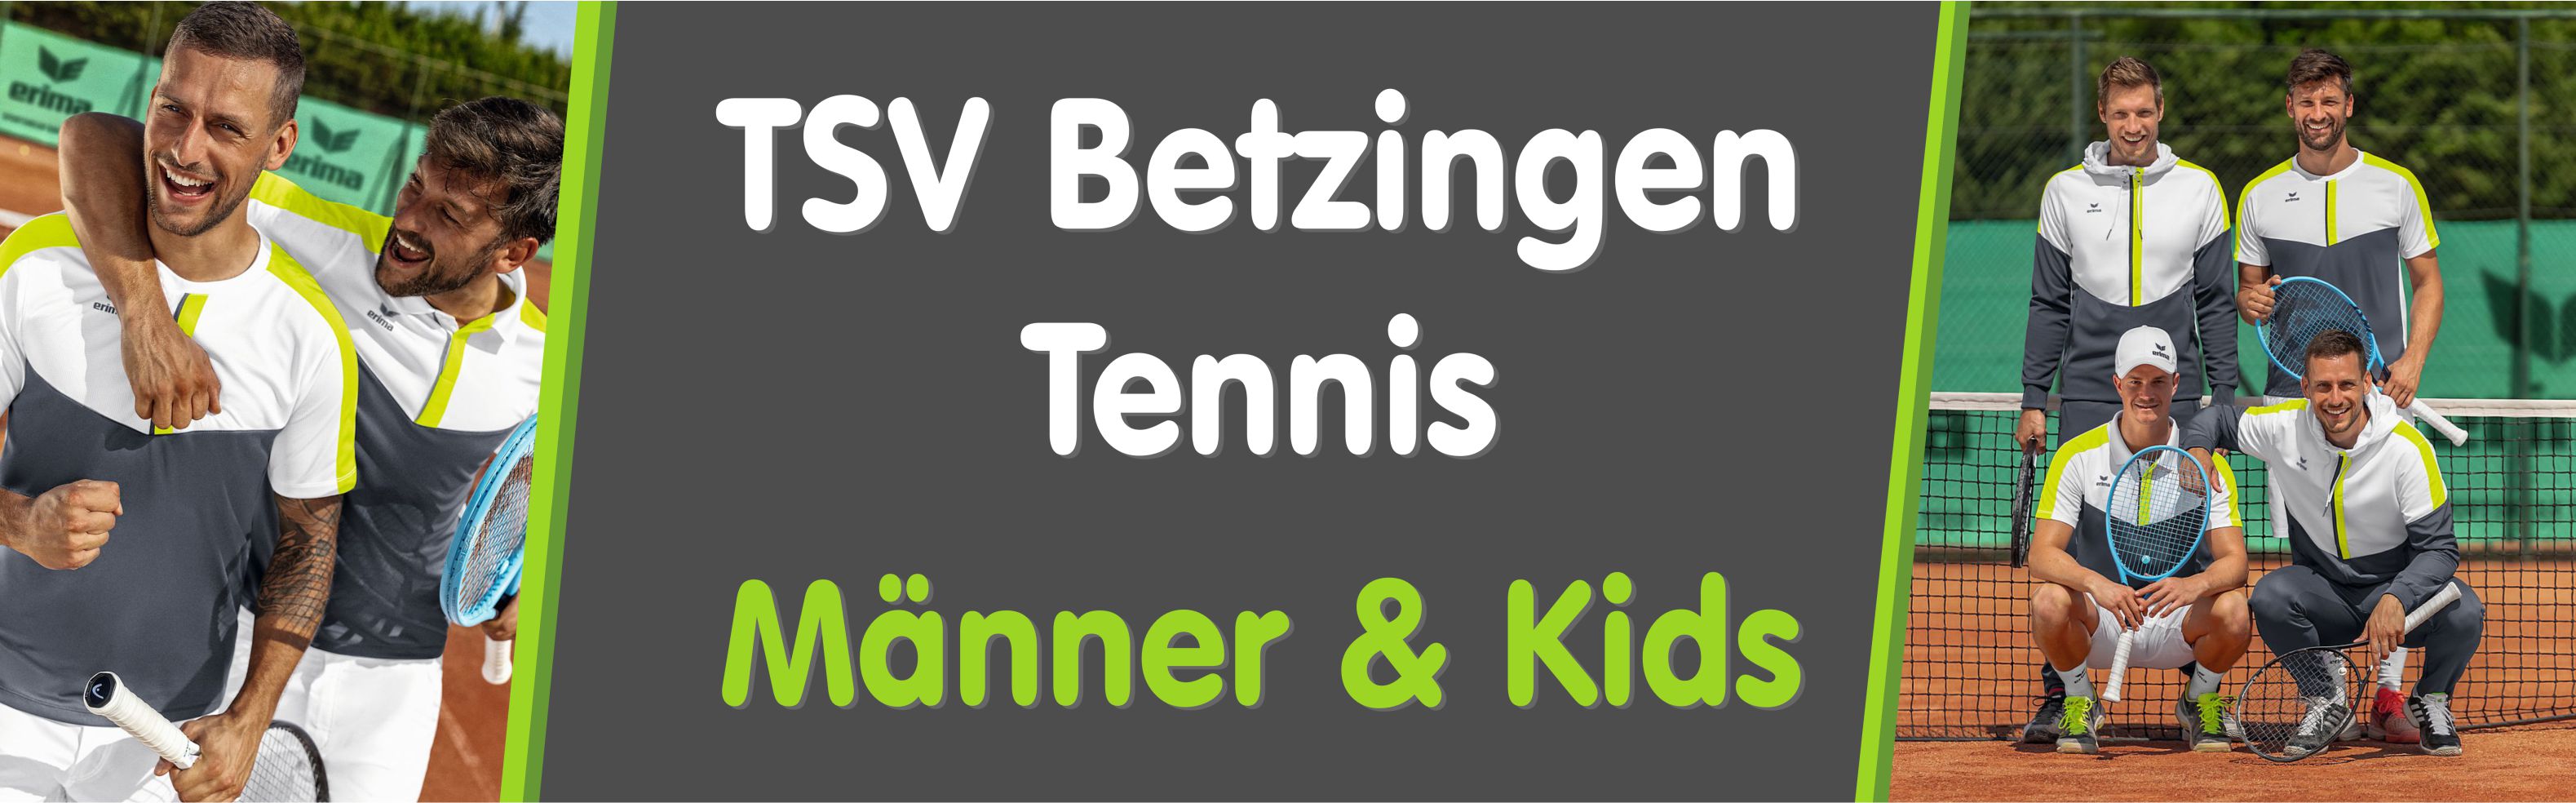 TSV Betzingen Männer & Kids